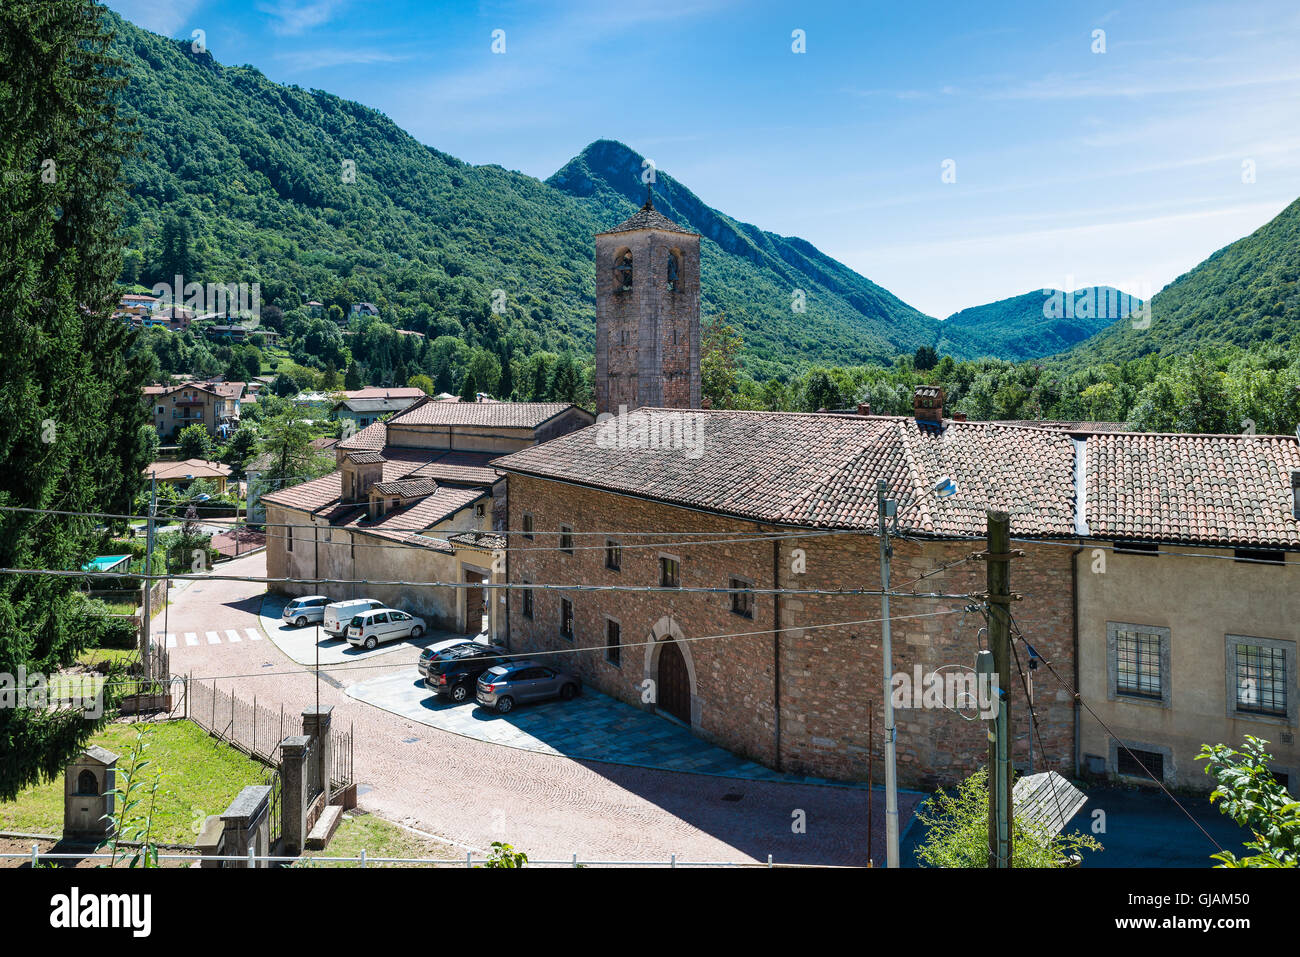 Badia di San Gemolo in Ganna, Valganna, provincia di Varese, Italia Foto  stock - Alamy